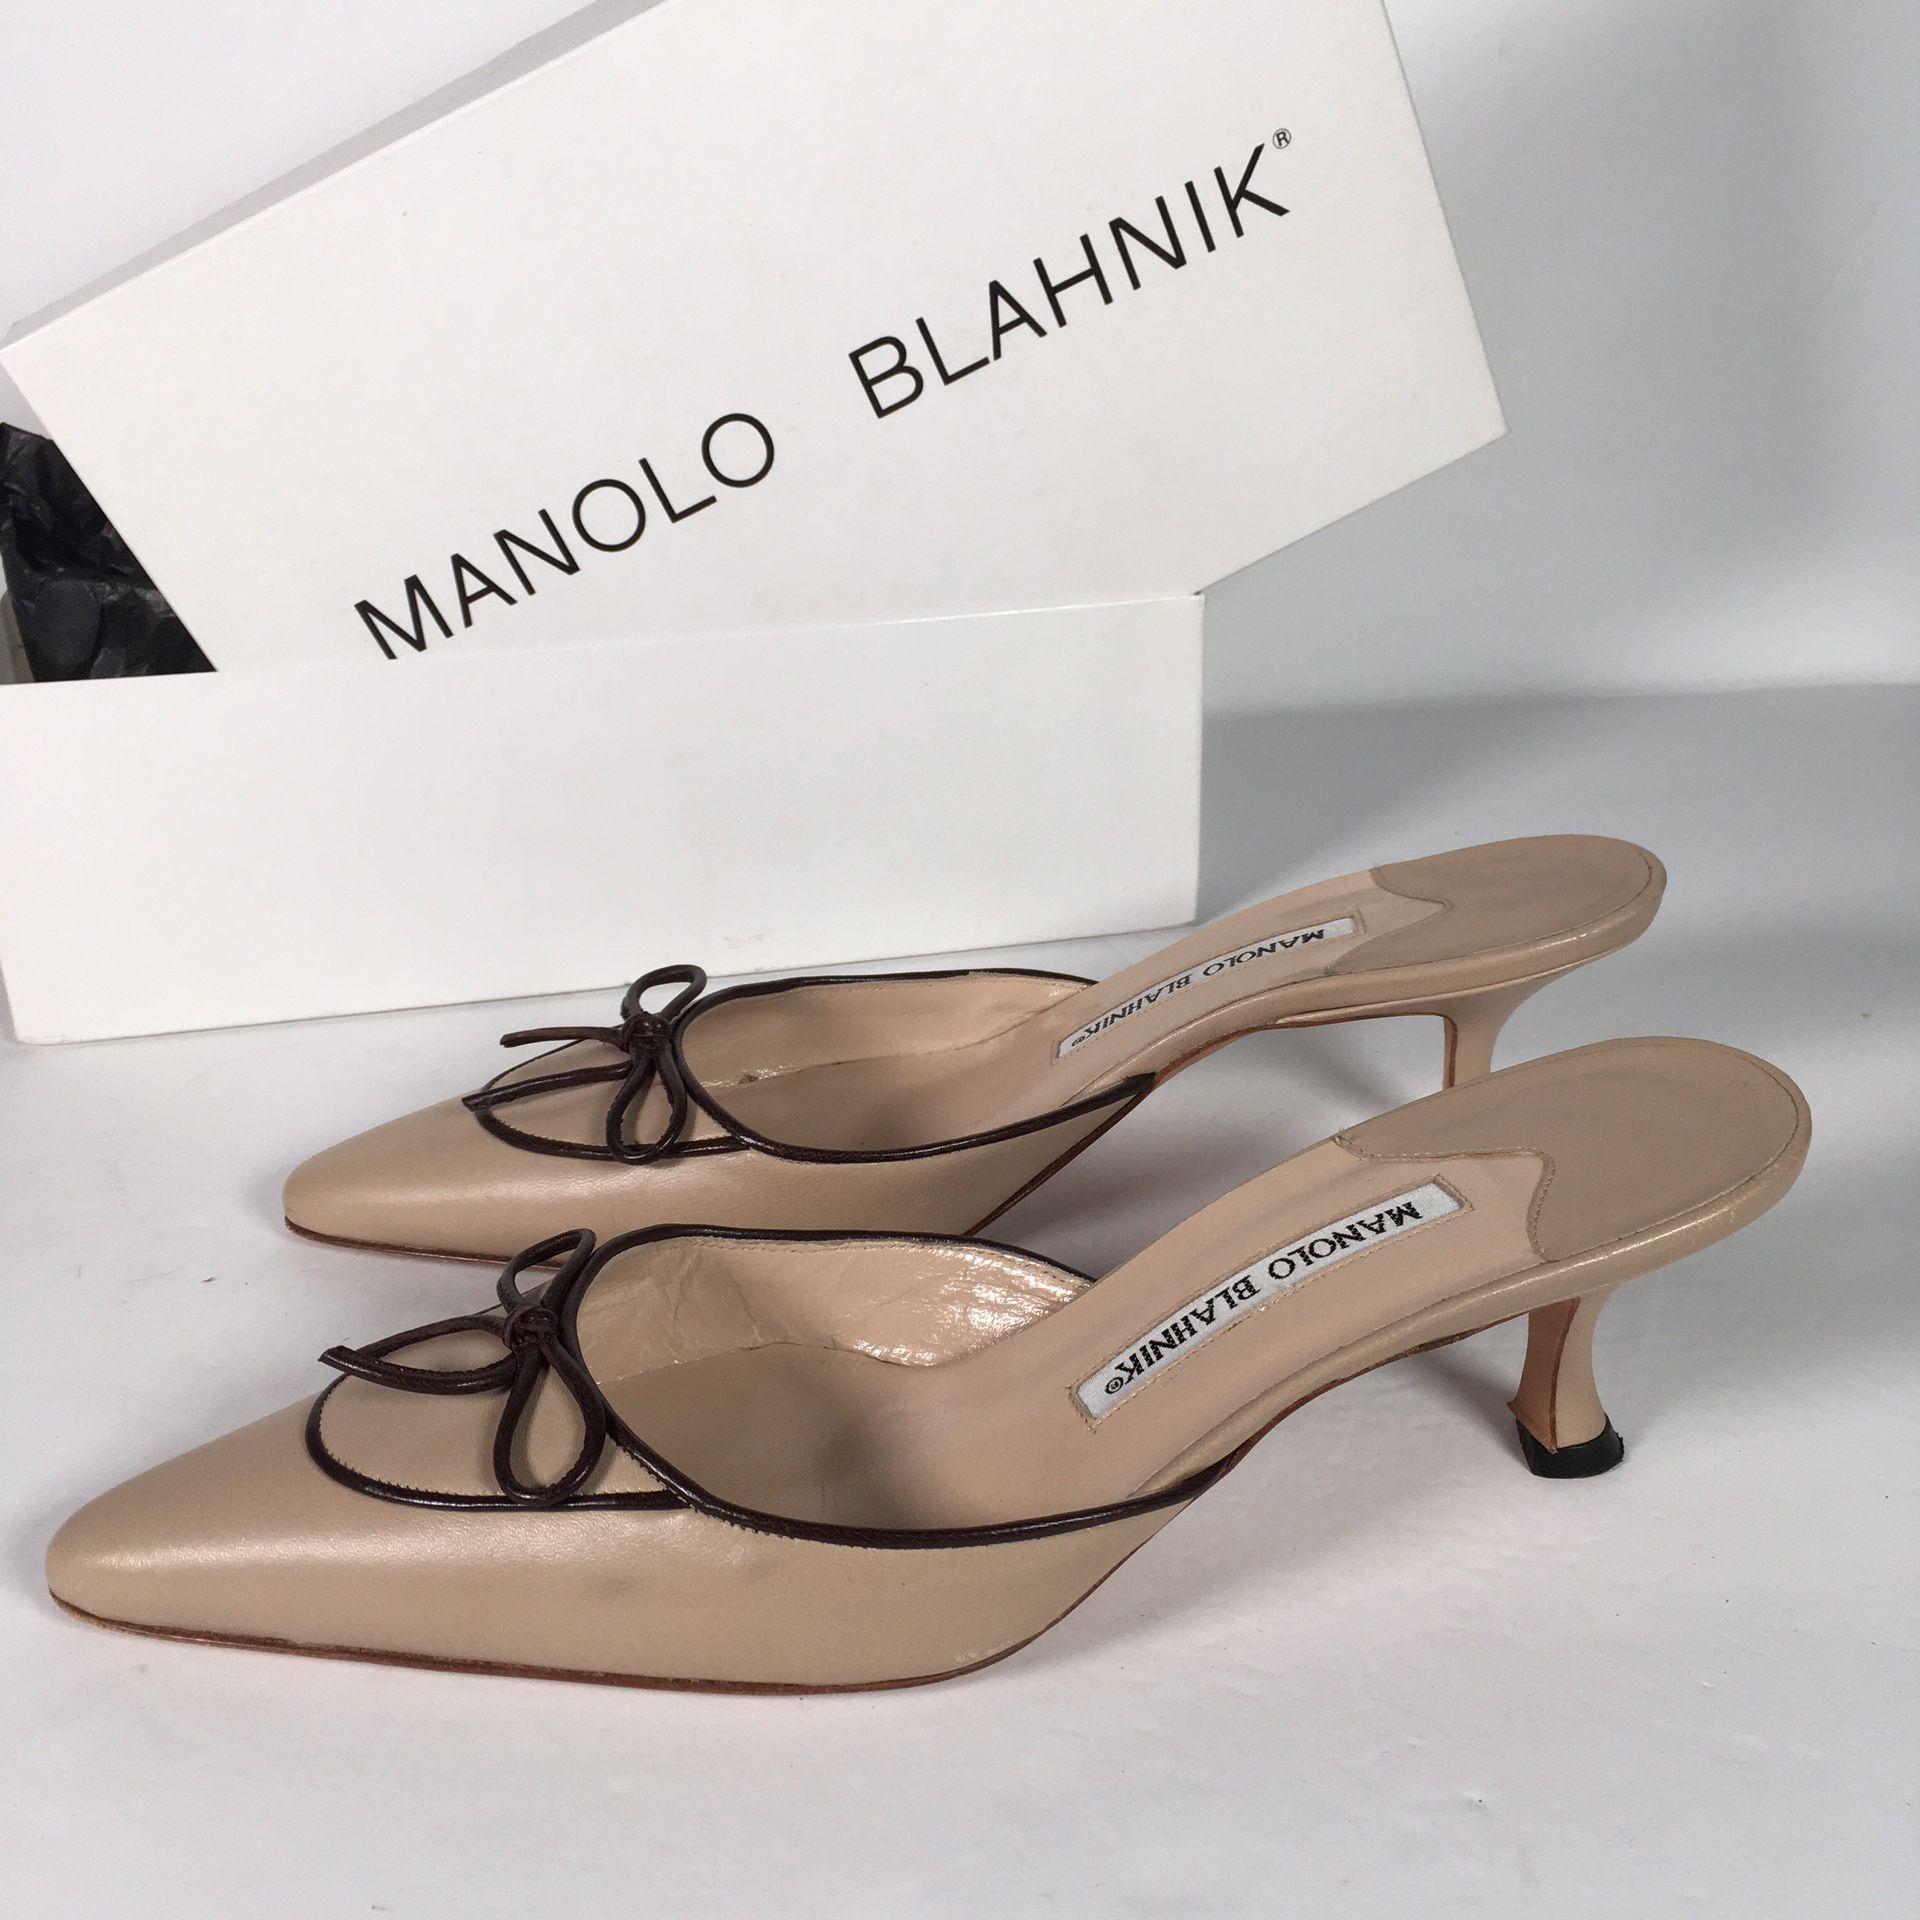 Manolo Blahnik Tan Pointed Leather Heels size 7.5